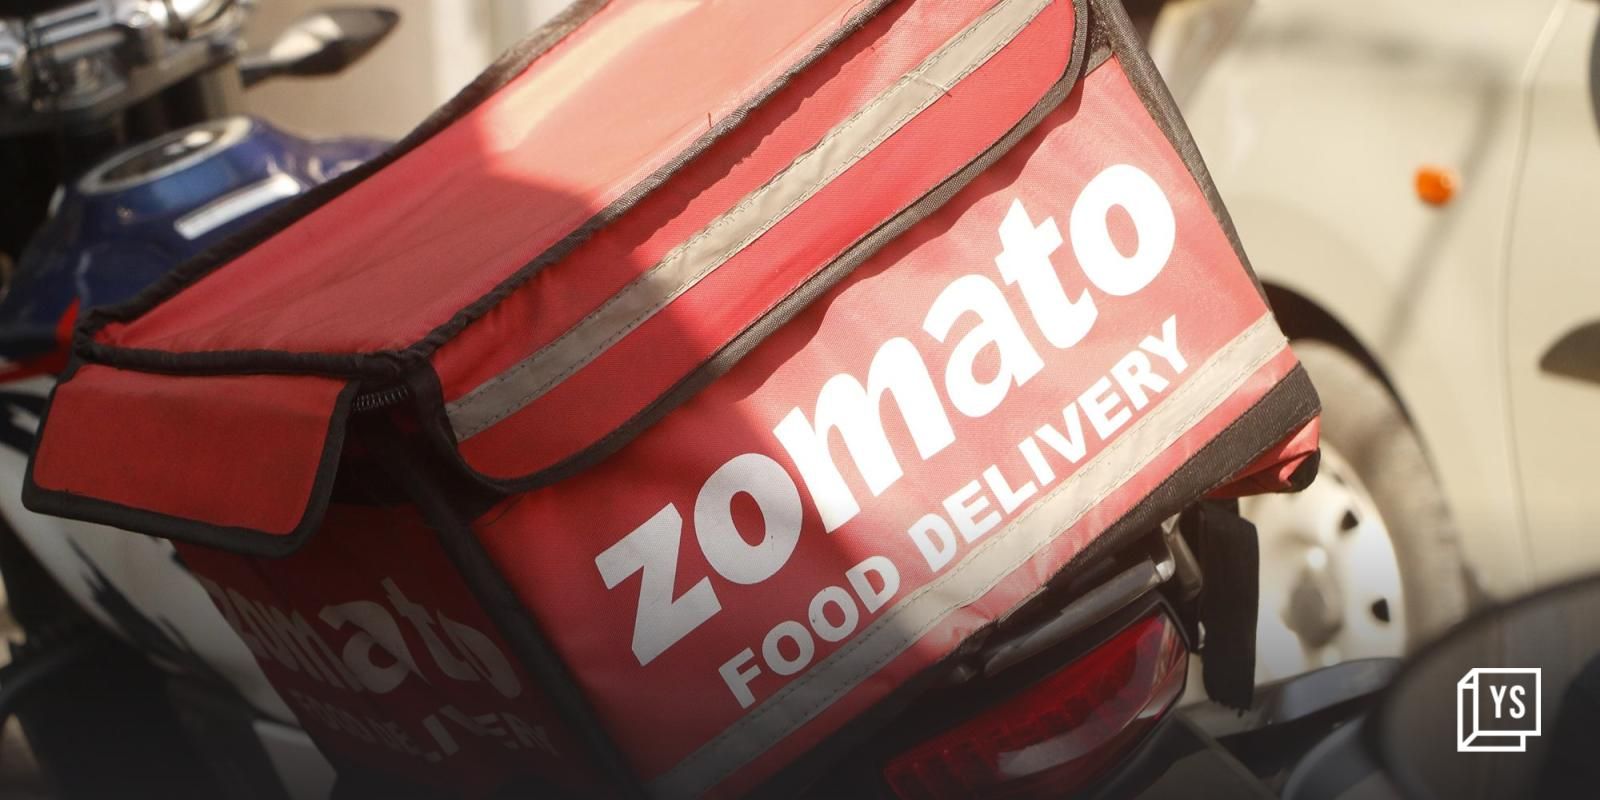 Zomato shares hit one-year high, surpass IPO price